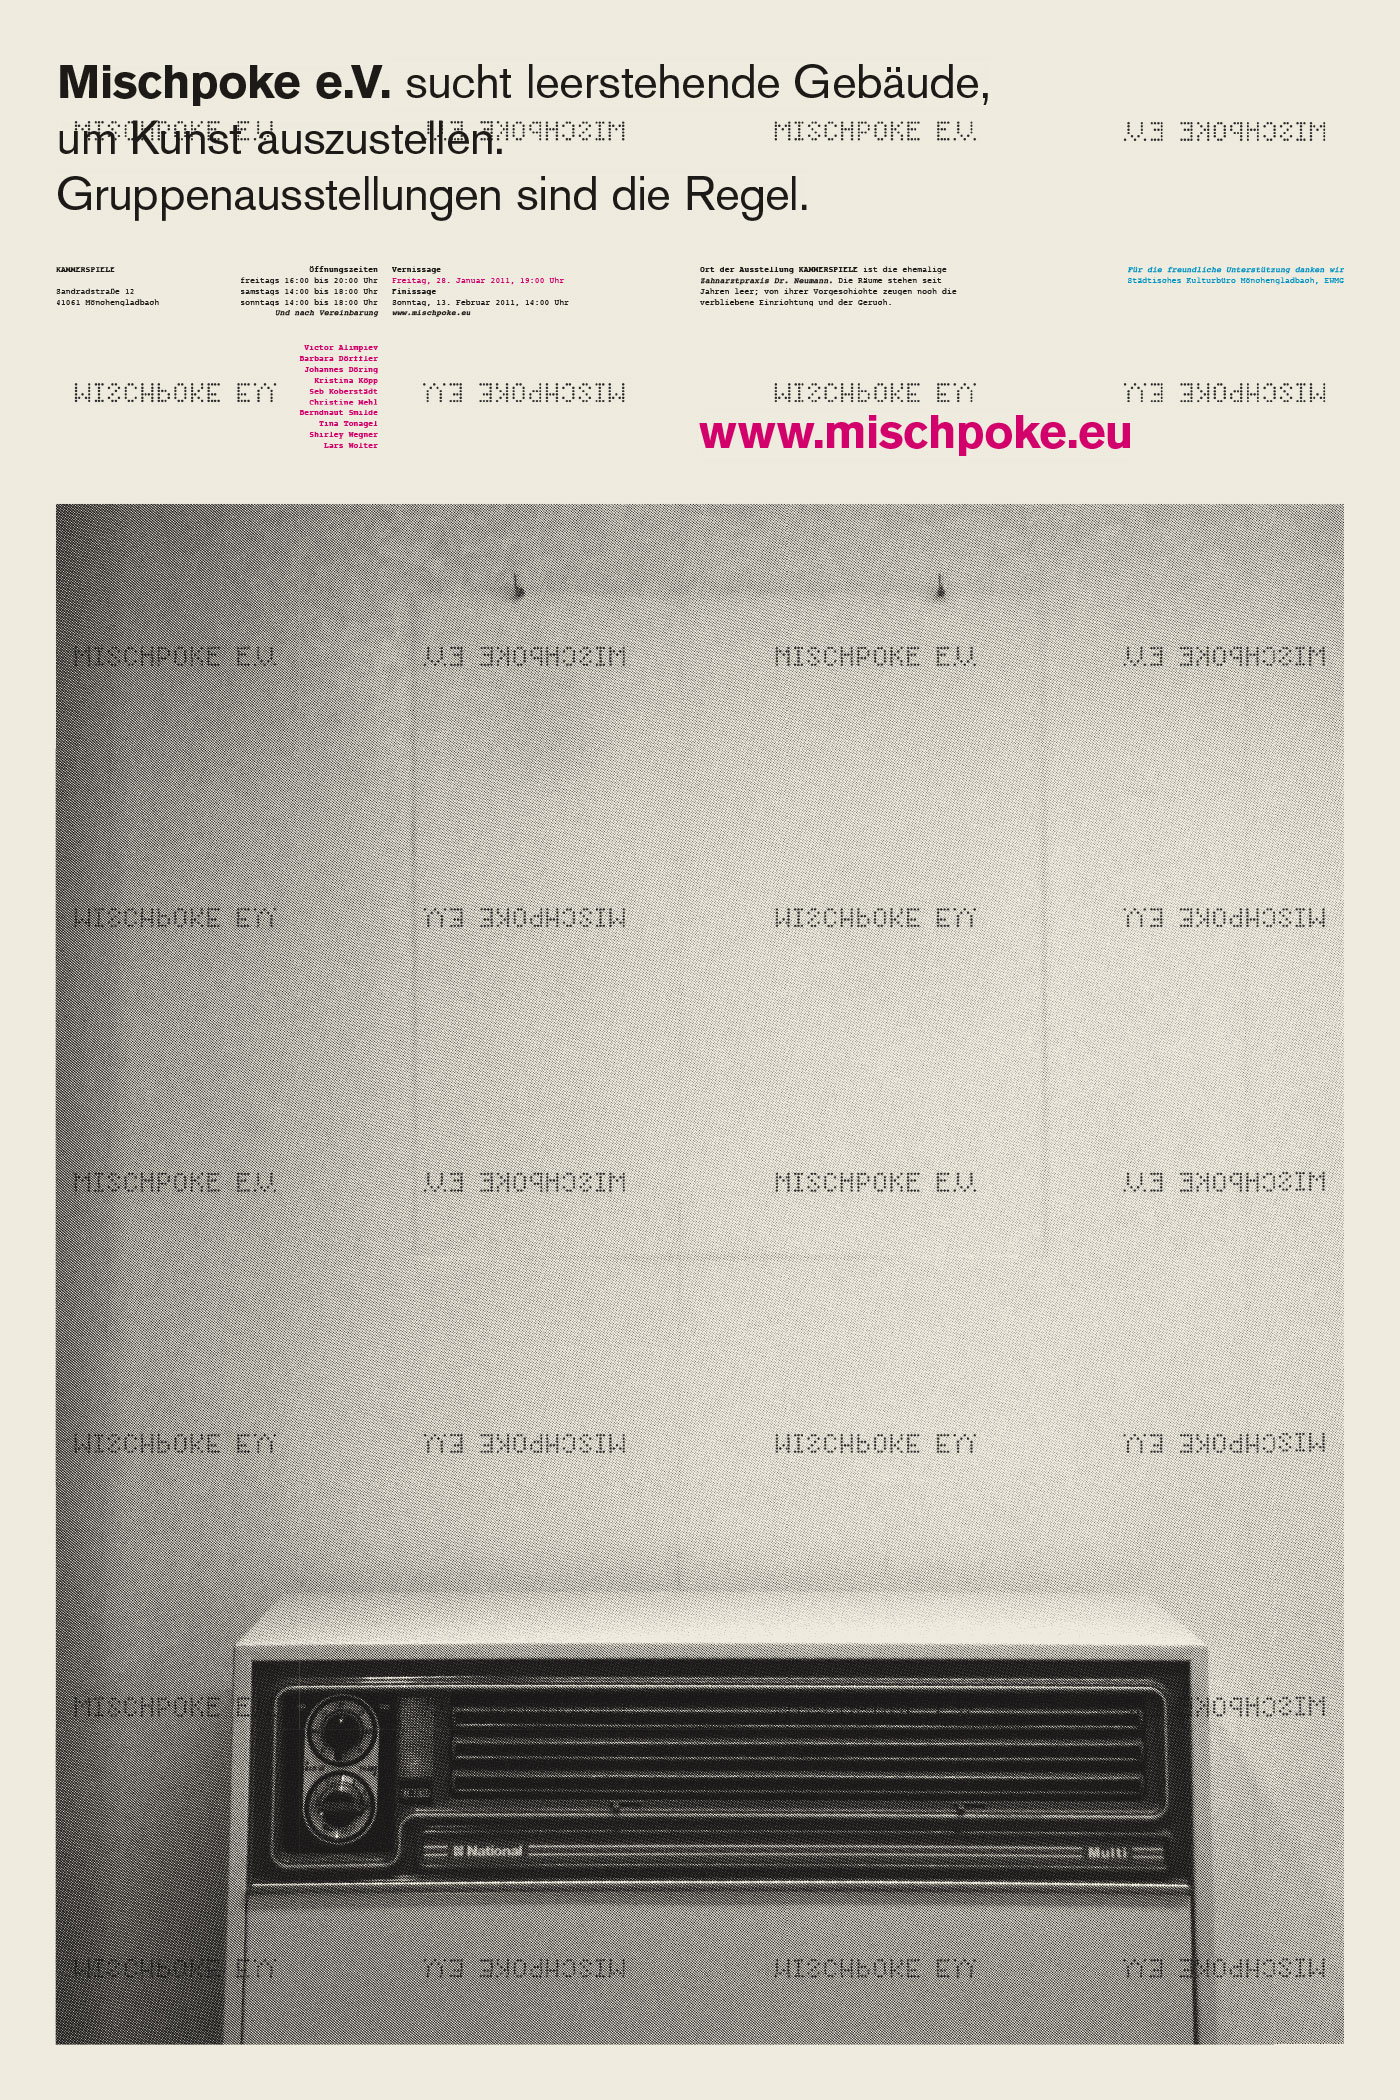 Corporate Design > Plakat für den Kunstverein Mischpoke e.V.